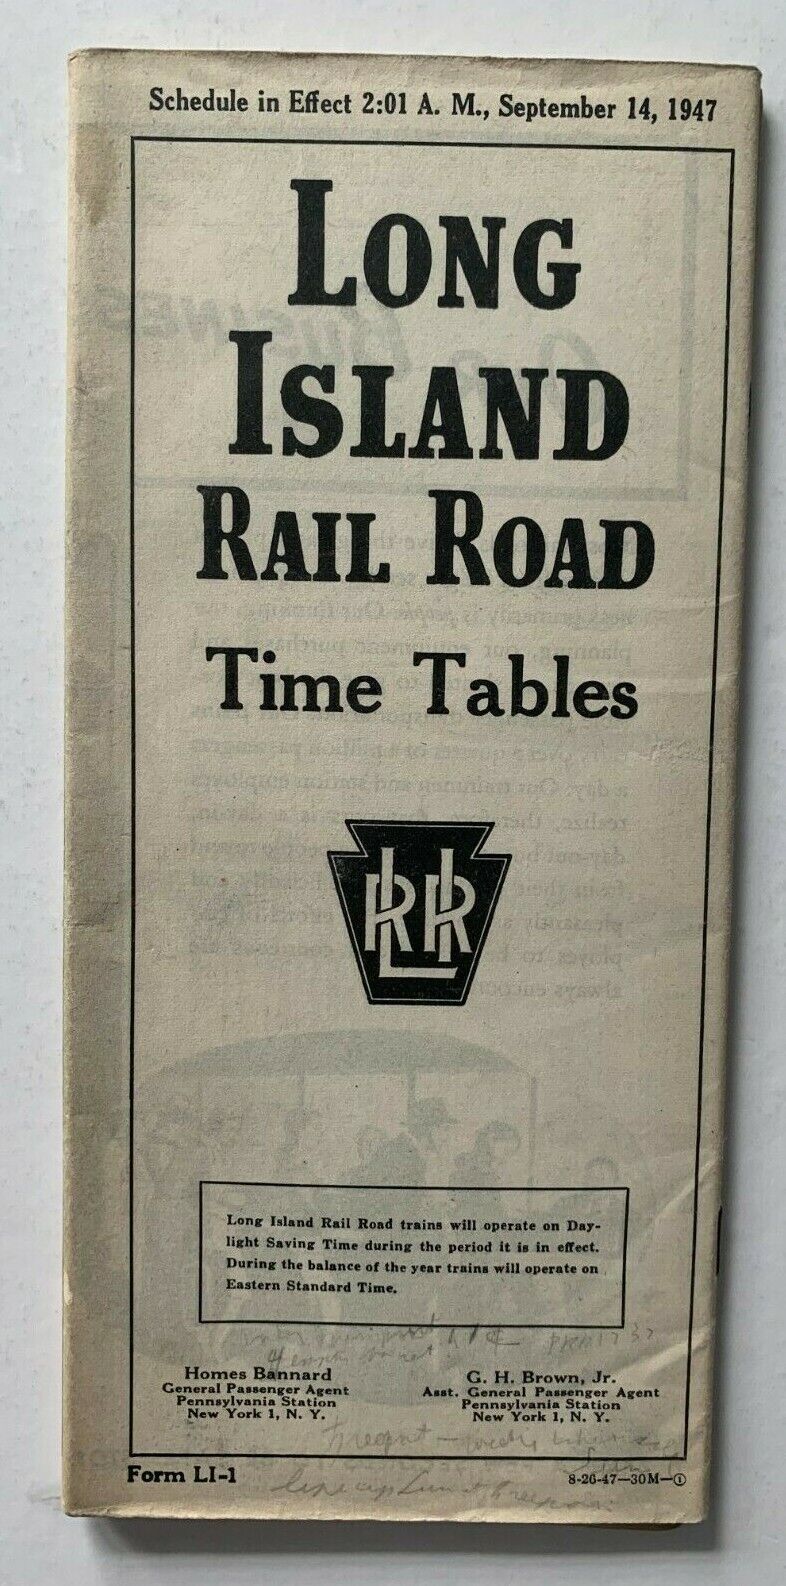 Sept 1947 Long Island Railroad System Timetable Train schedule LIRR RR brochure